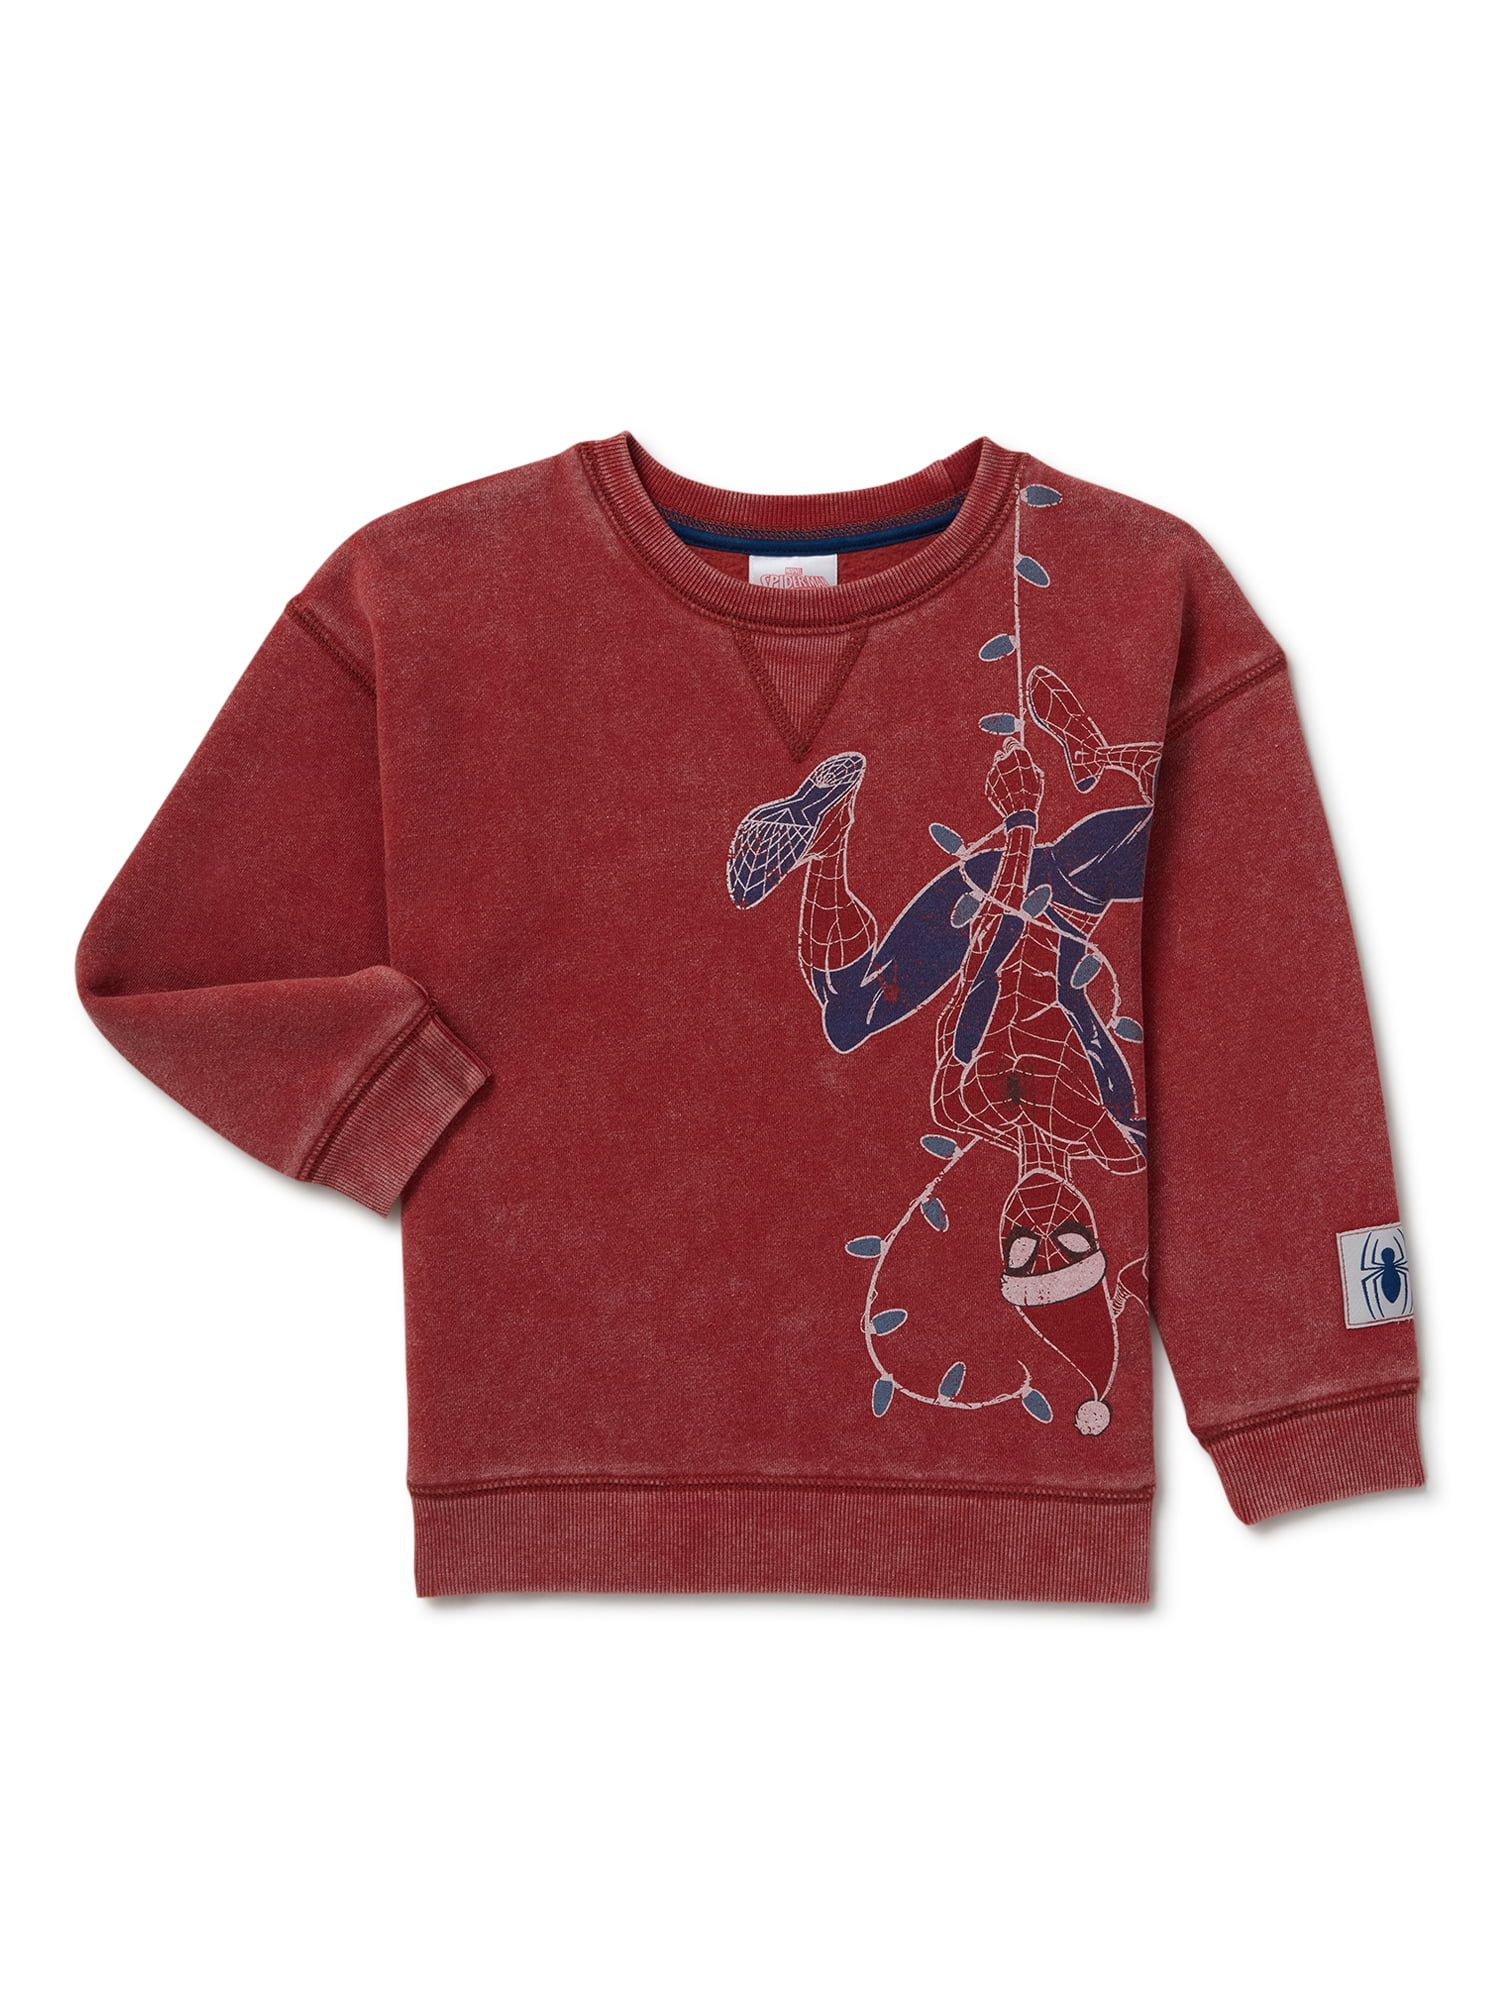 Spider-Man Baby and Toddler Boys Festive Crewneck Sweatshirt, Sizes 12M-5T | Walmart (US)